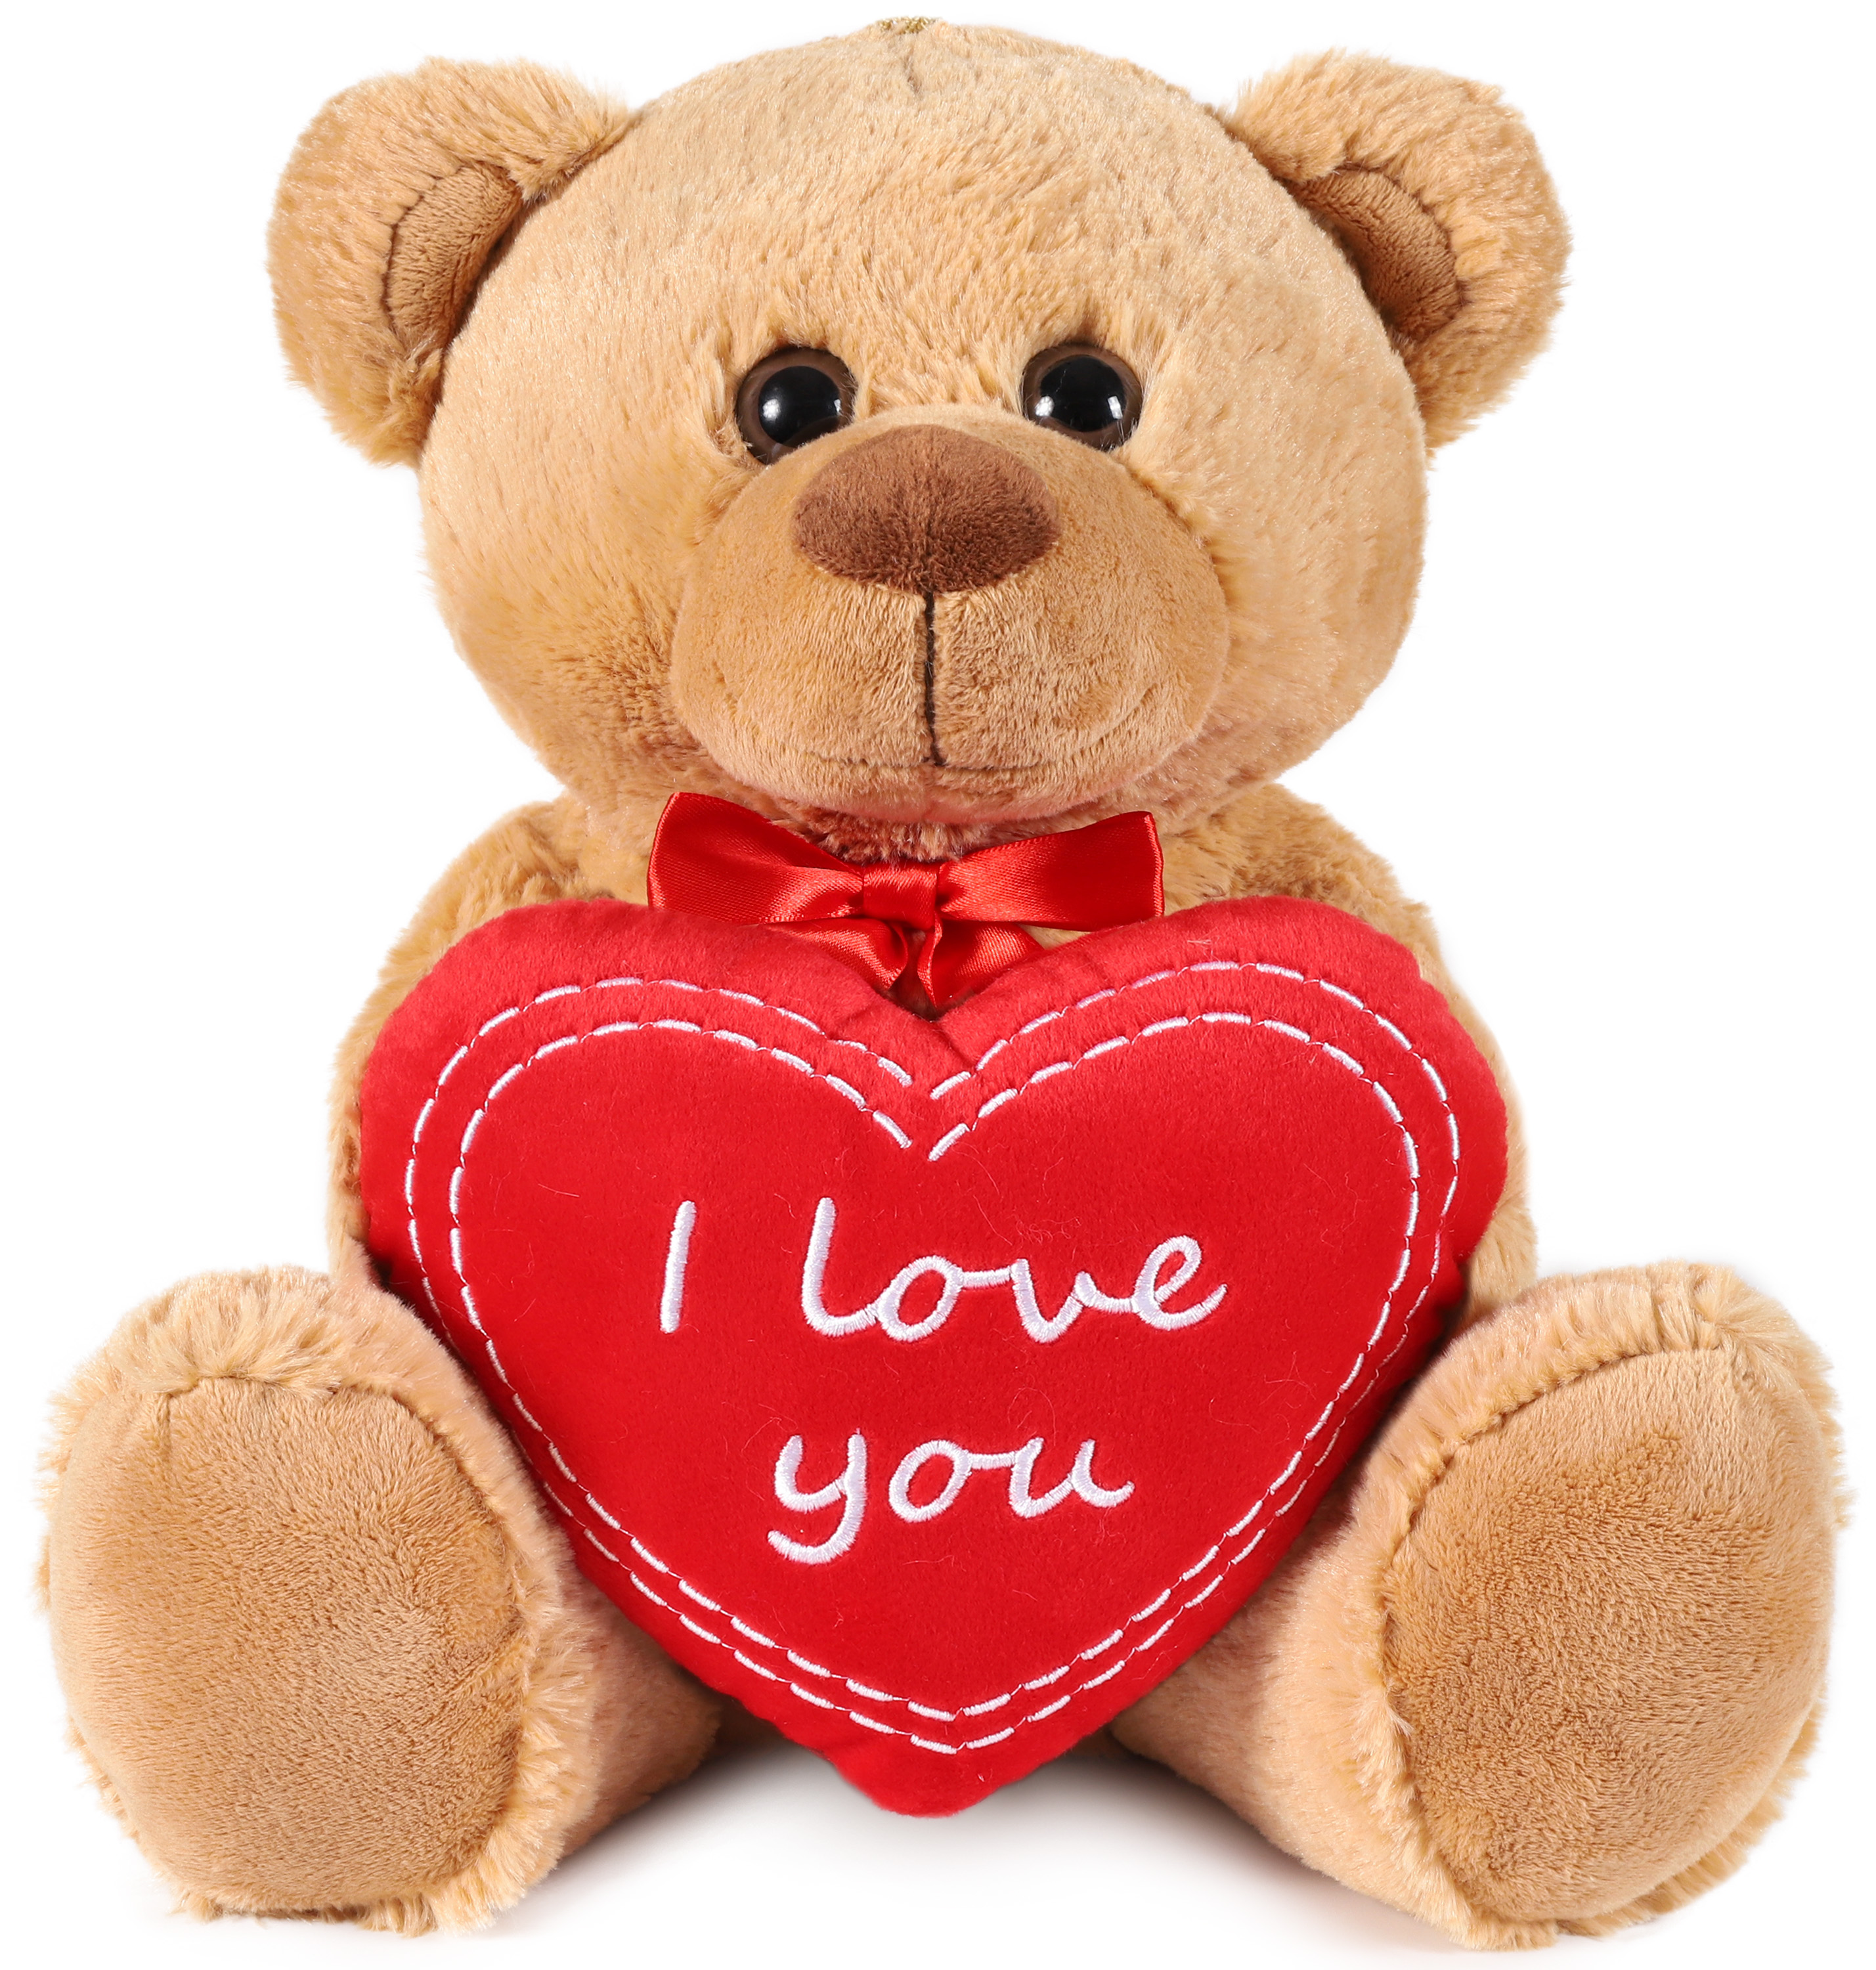 neu-je t 'aime-süßen und knuddeligen teddybär-geschenk i love you 